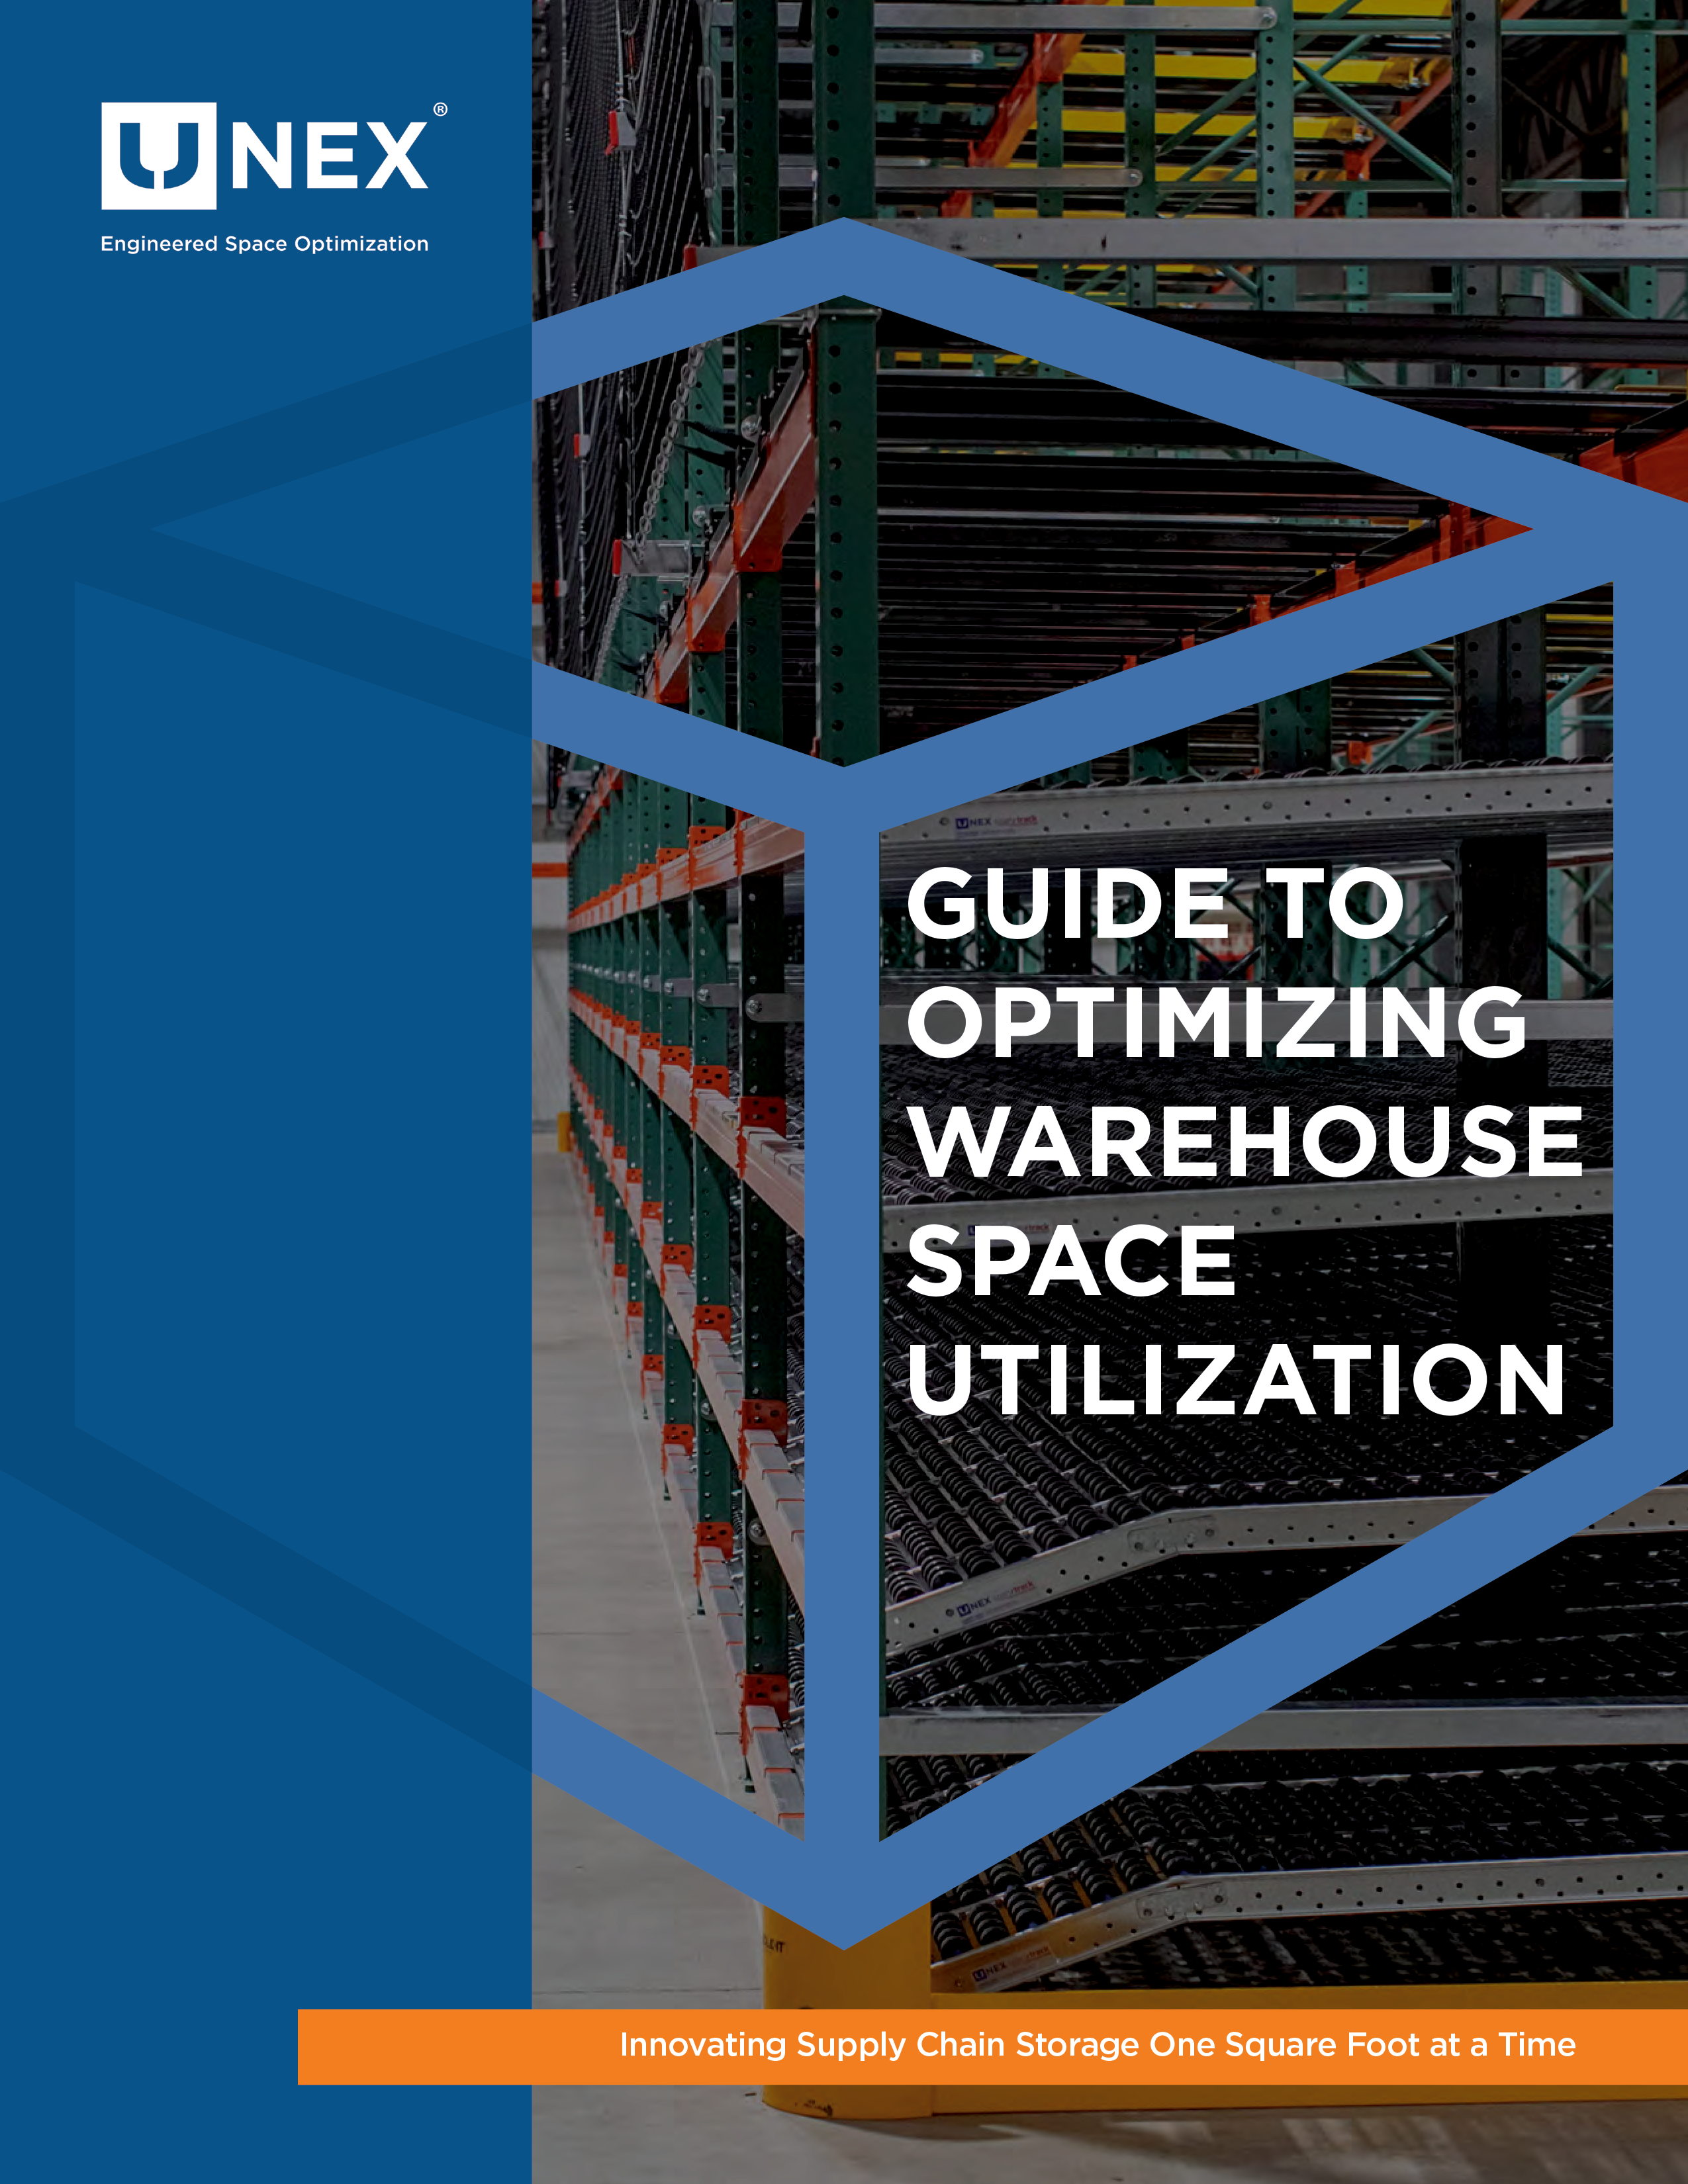 UNEX-Warehouse-Space-Optimization-Cover-1